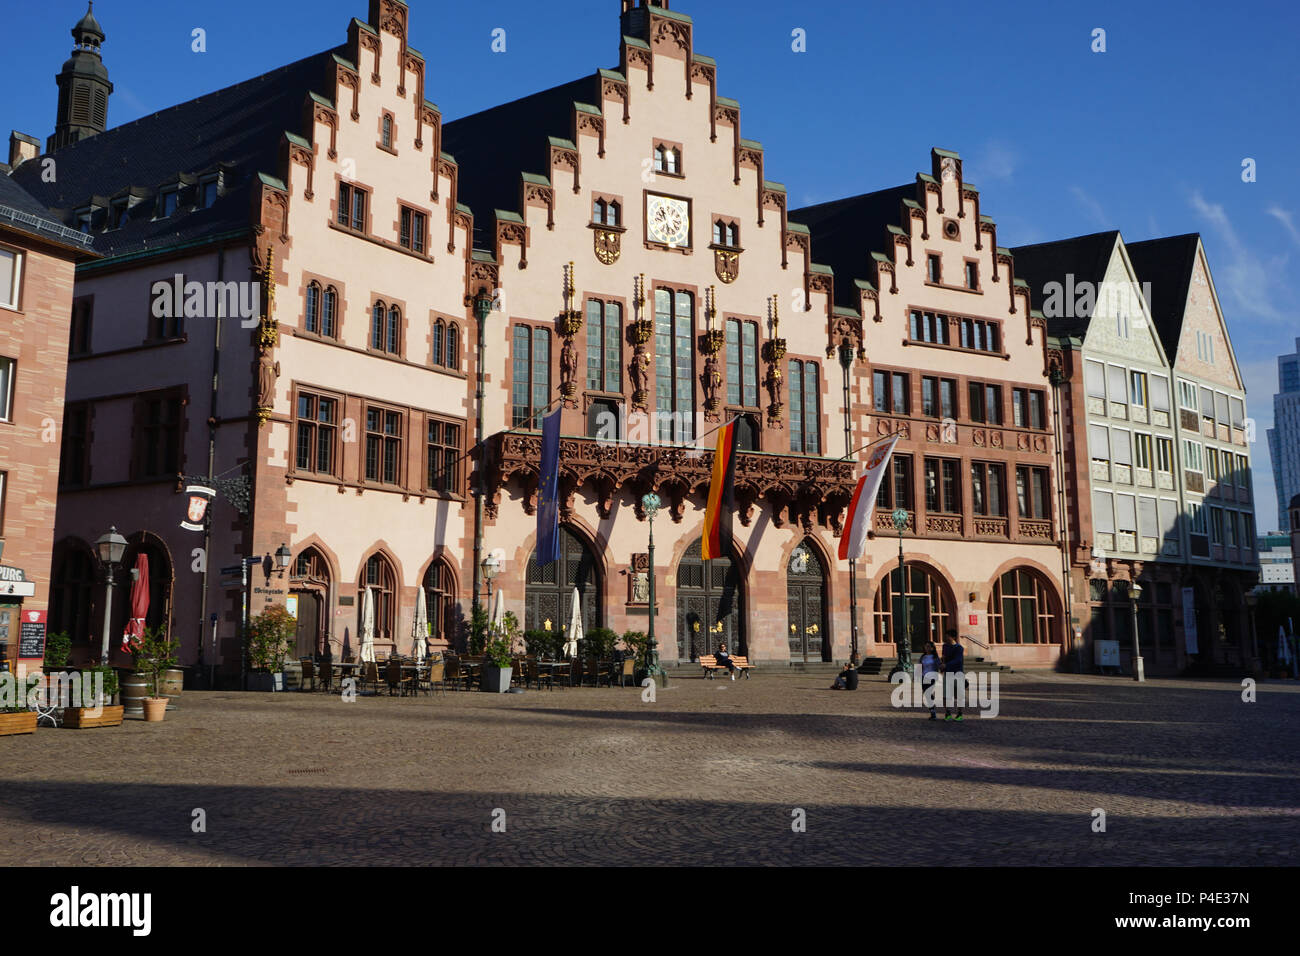 Rathaus, Römer, Römerberg, Altstadt, Altstadt, Frankfurt am Main, Deutschland Stockfoto